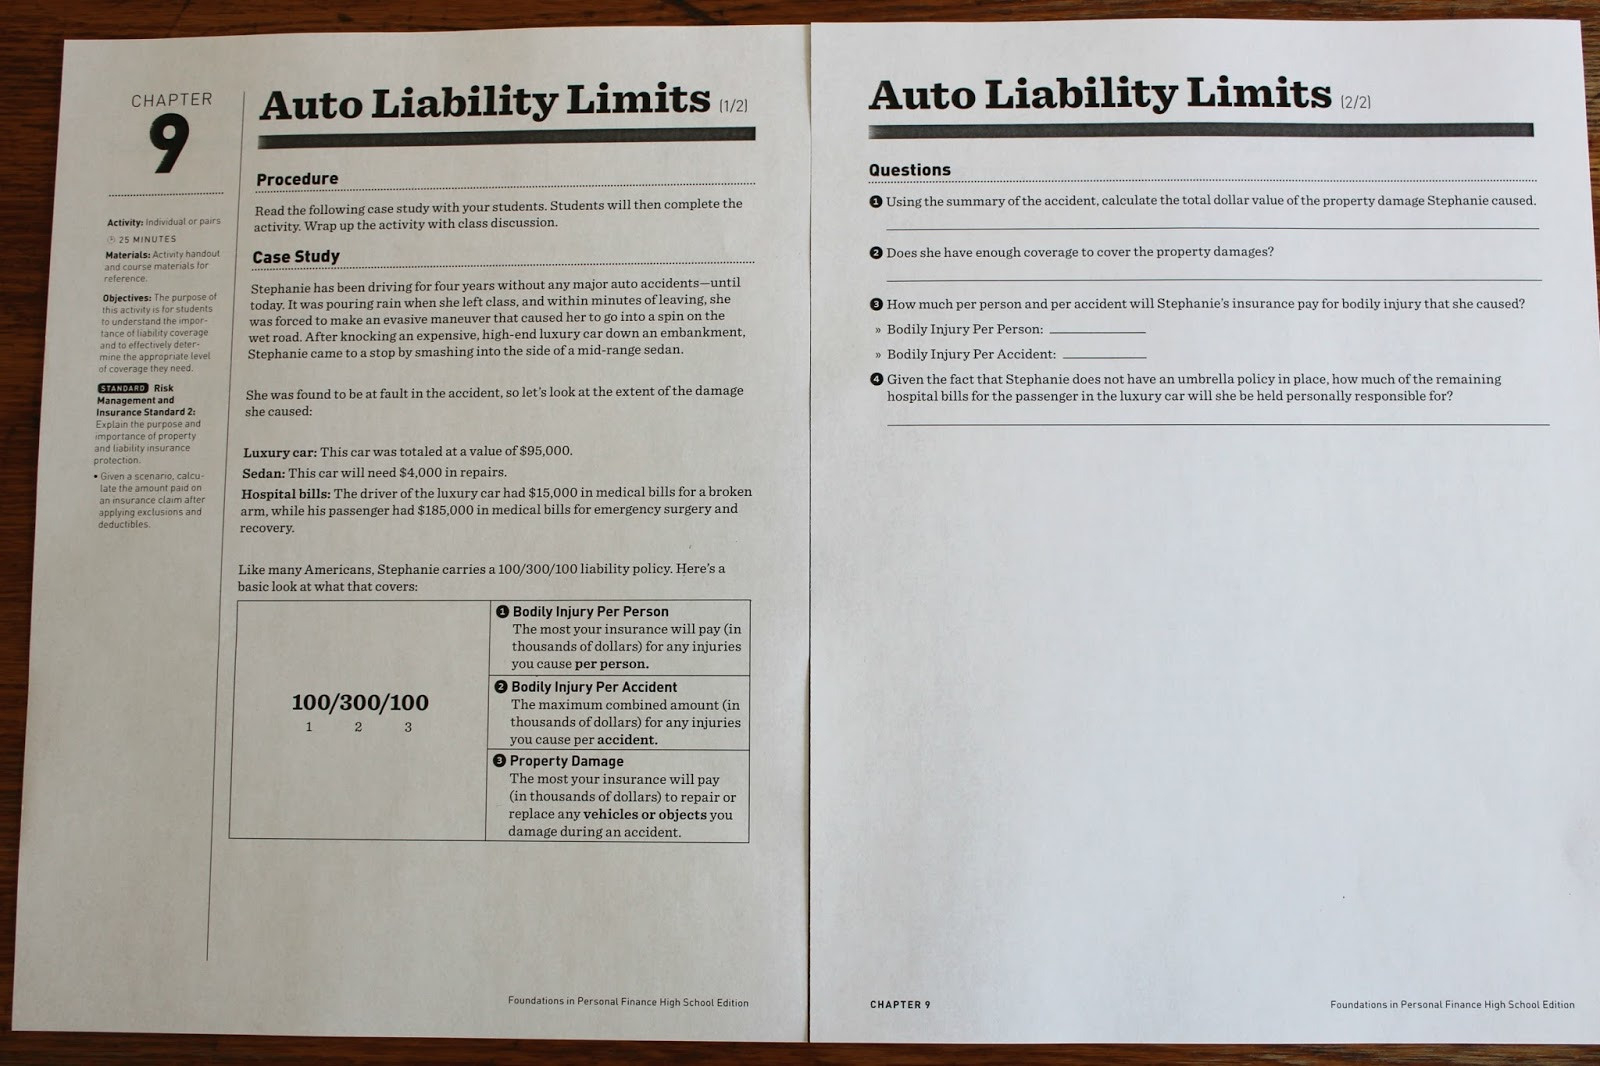 Auto Liability Limits Worksheet Answers